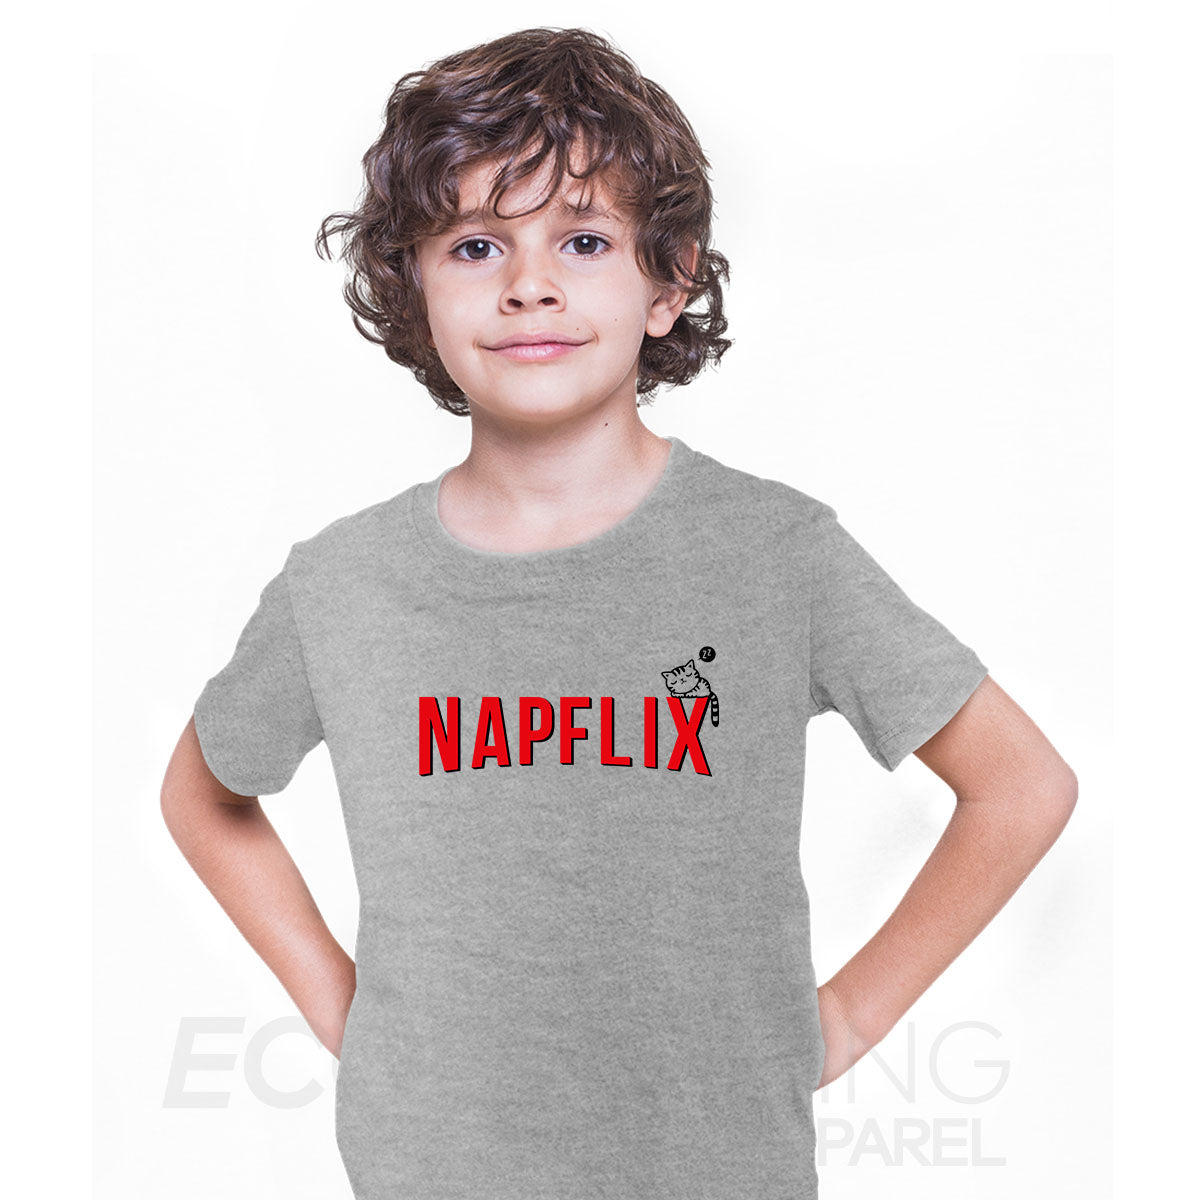 Napflix Funny Novelty Movie Streaming TV Adult Kids Birthday Gift T-shirt for Kids - Kuzi Tees